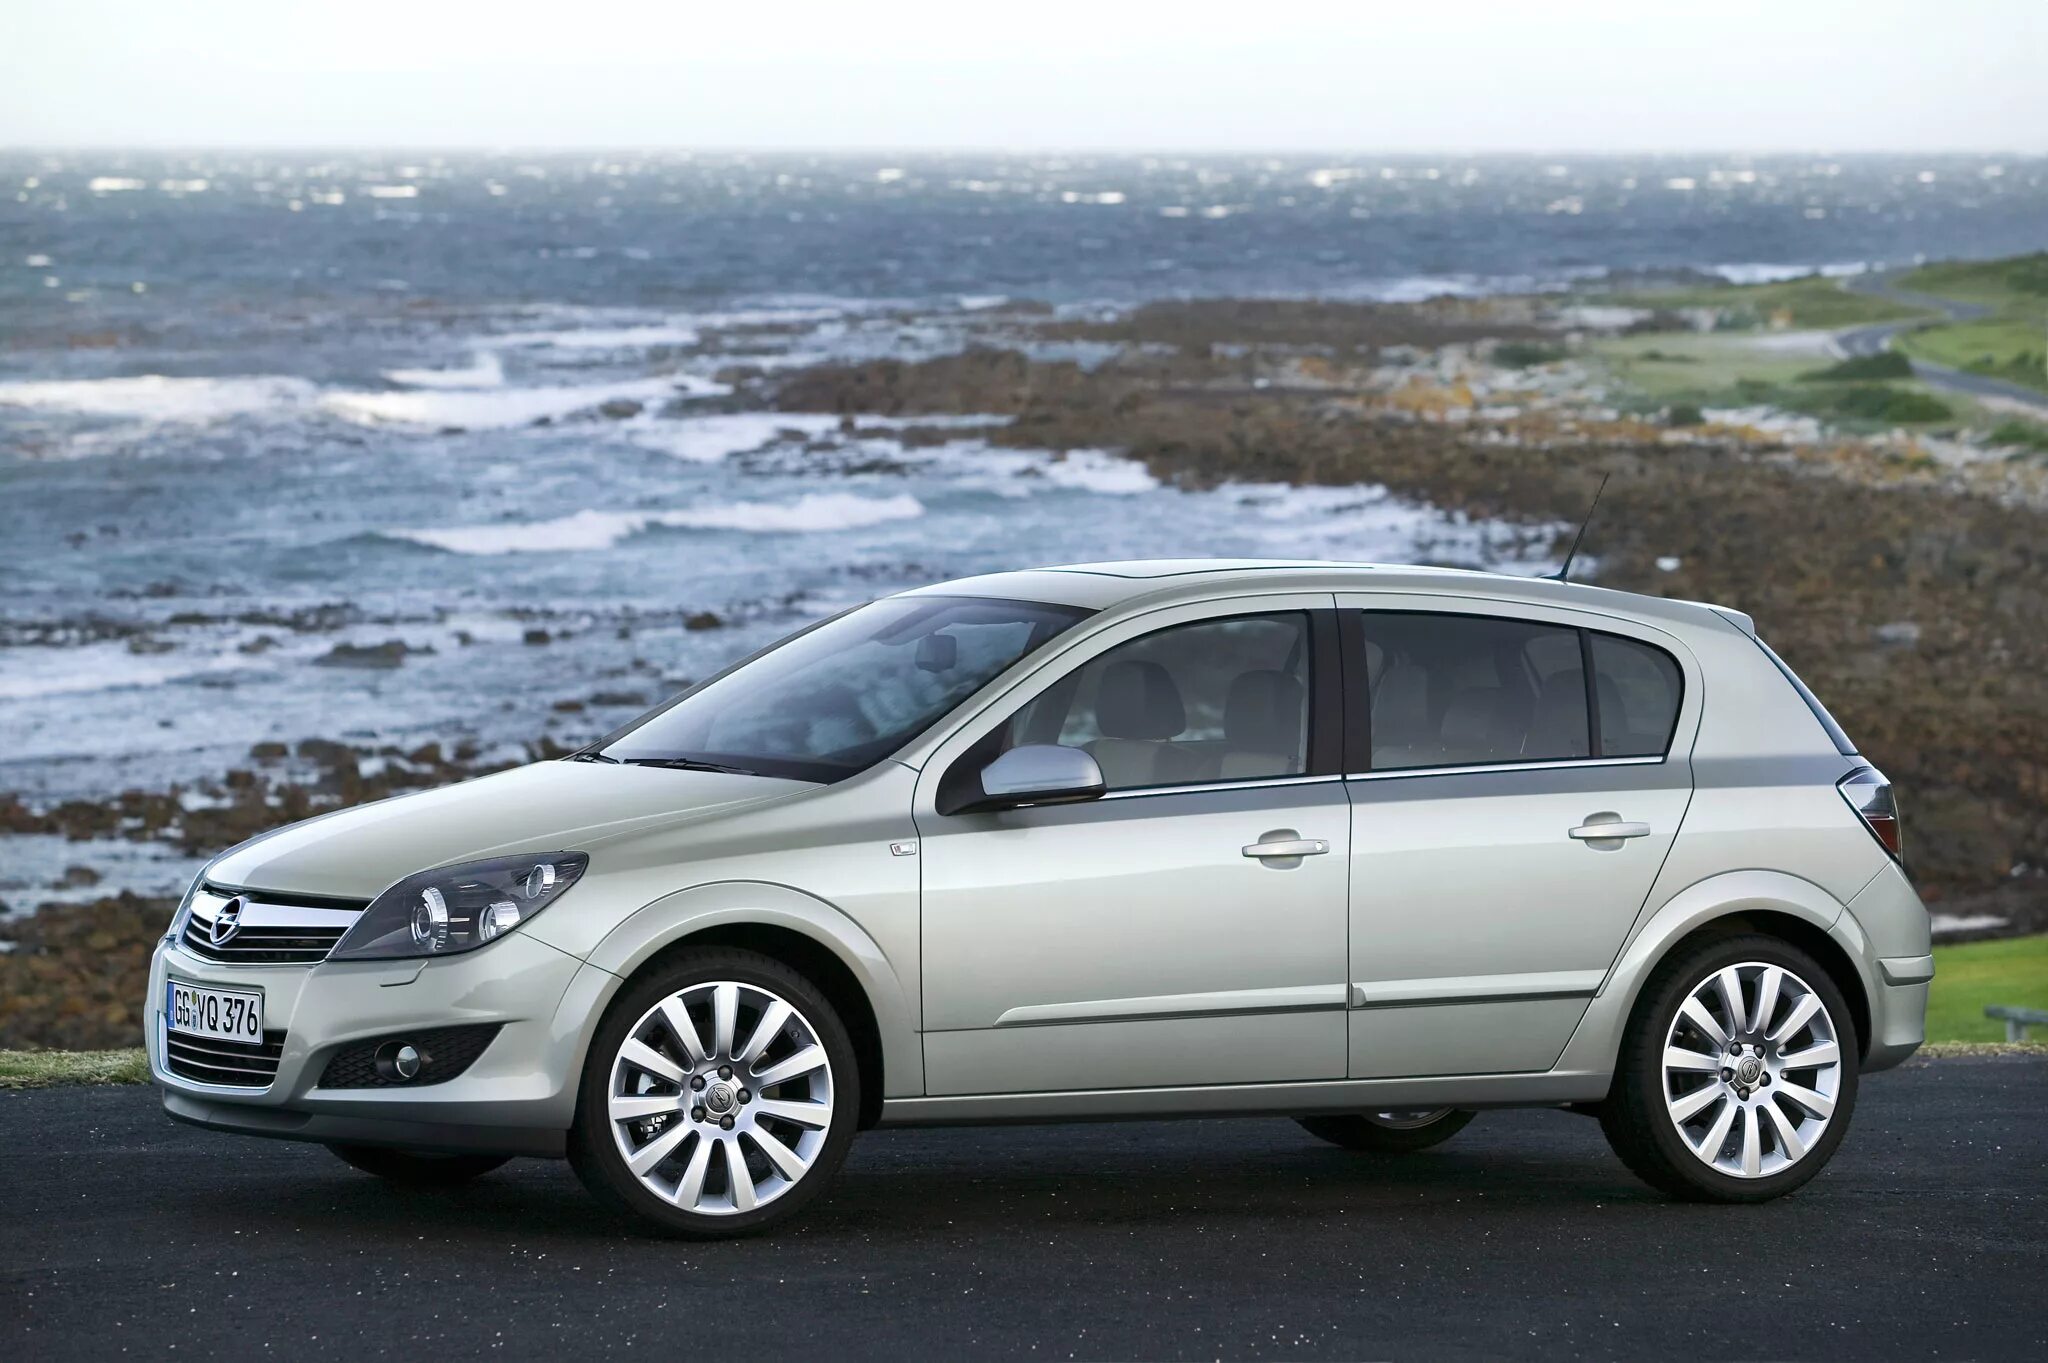 Opel Astra h 2007. Opel Astra 2007 Hatchback. Opel Astra h 2014. Opel family